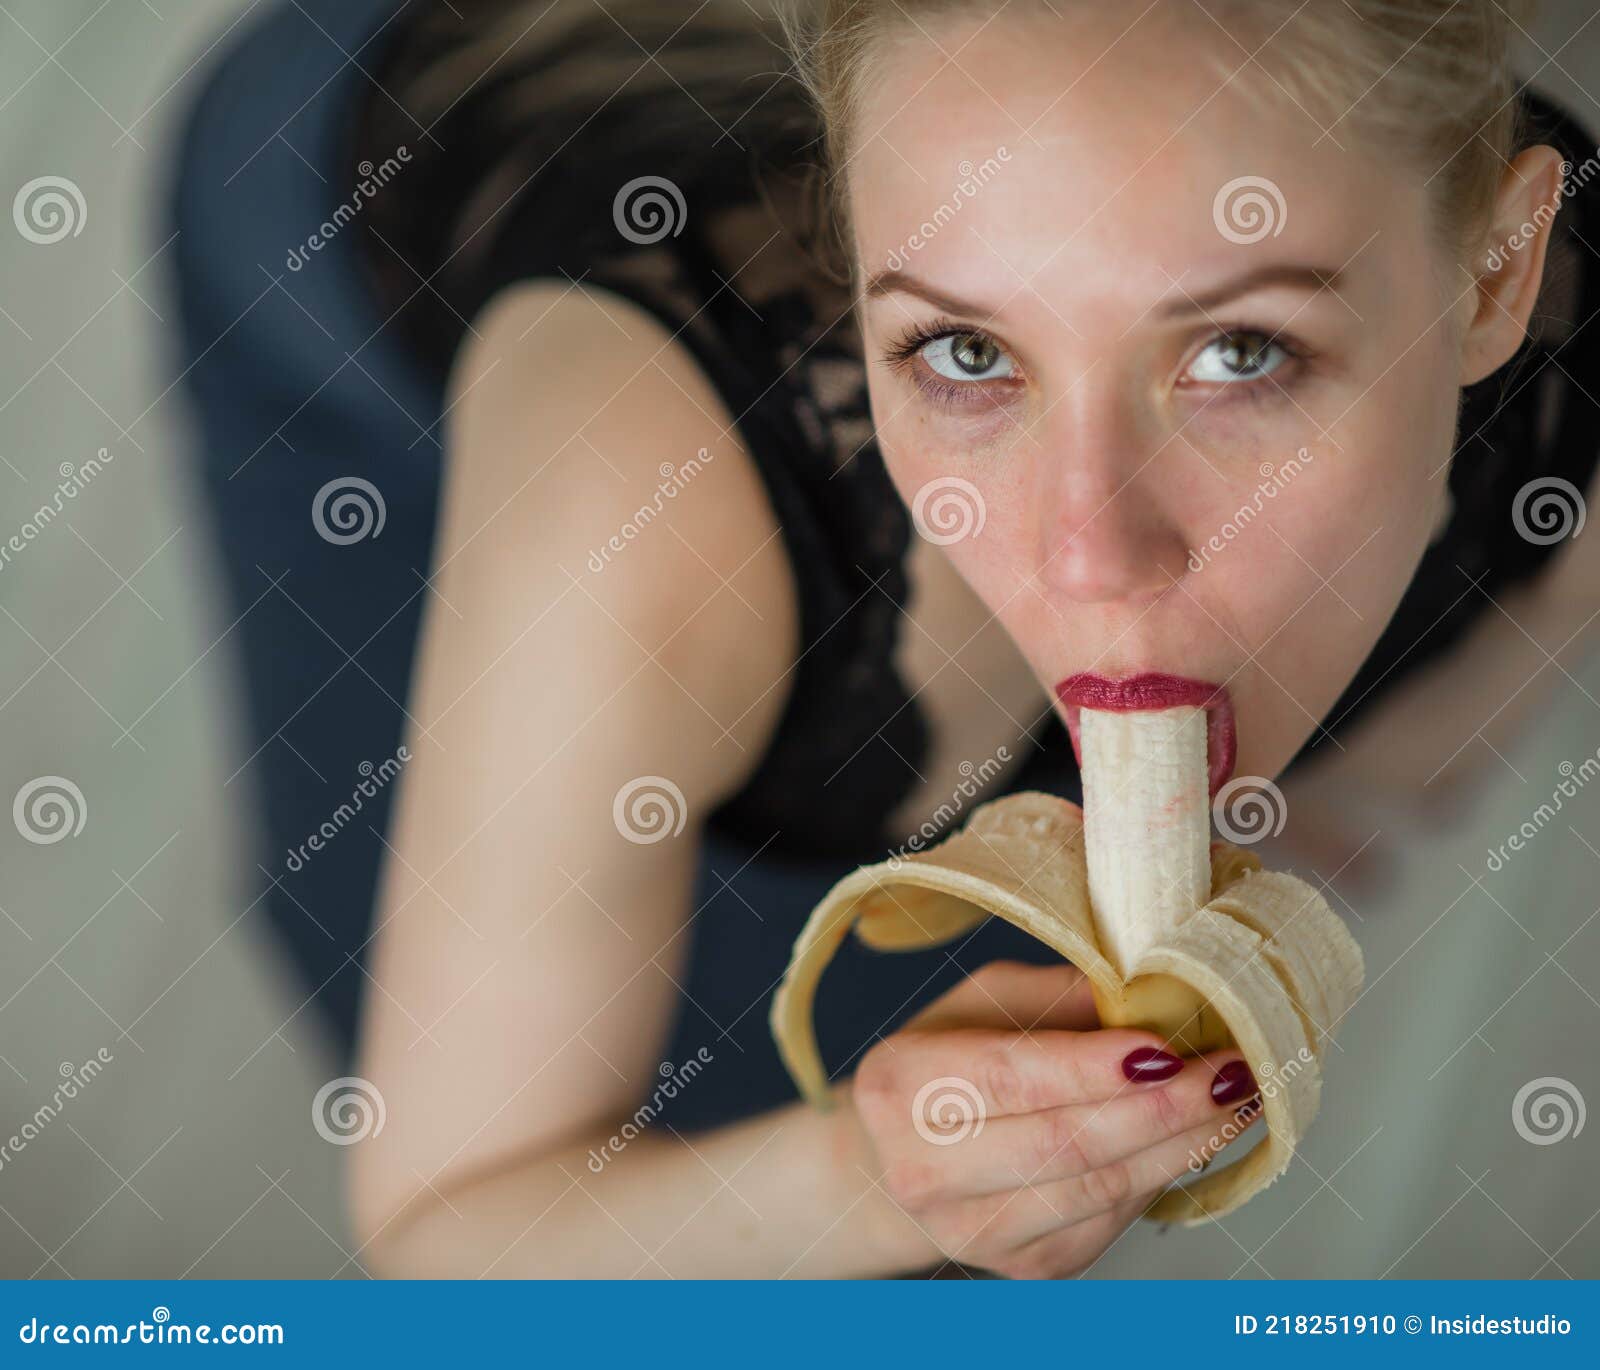 Adult European Girl Sexually Licks and Sucks a Big Banana. Fantasies about Oral pic